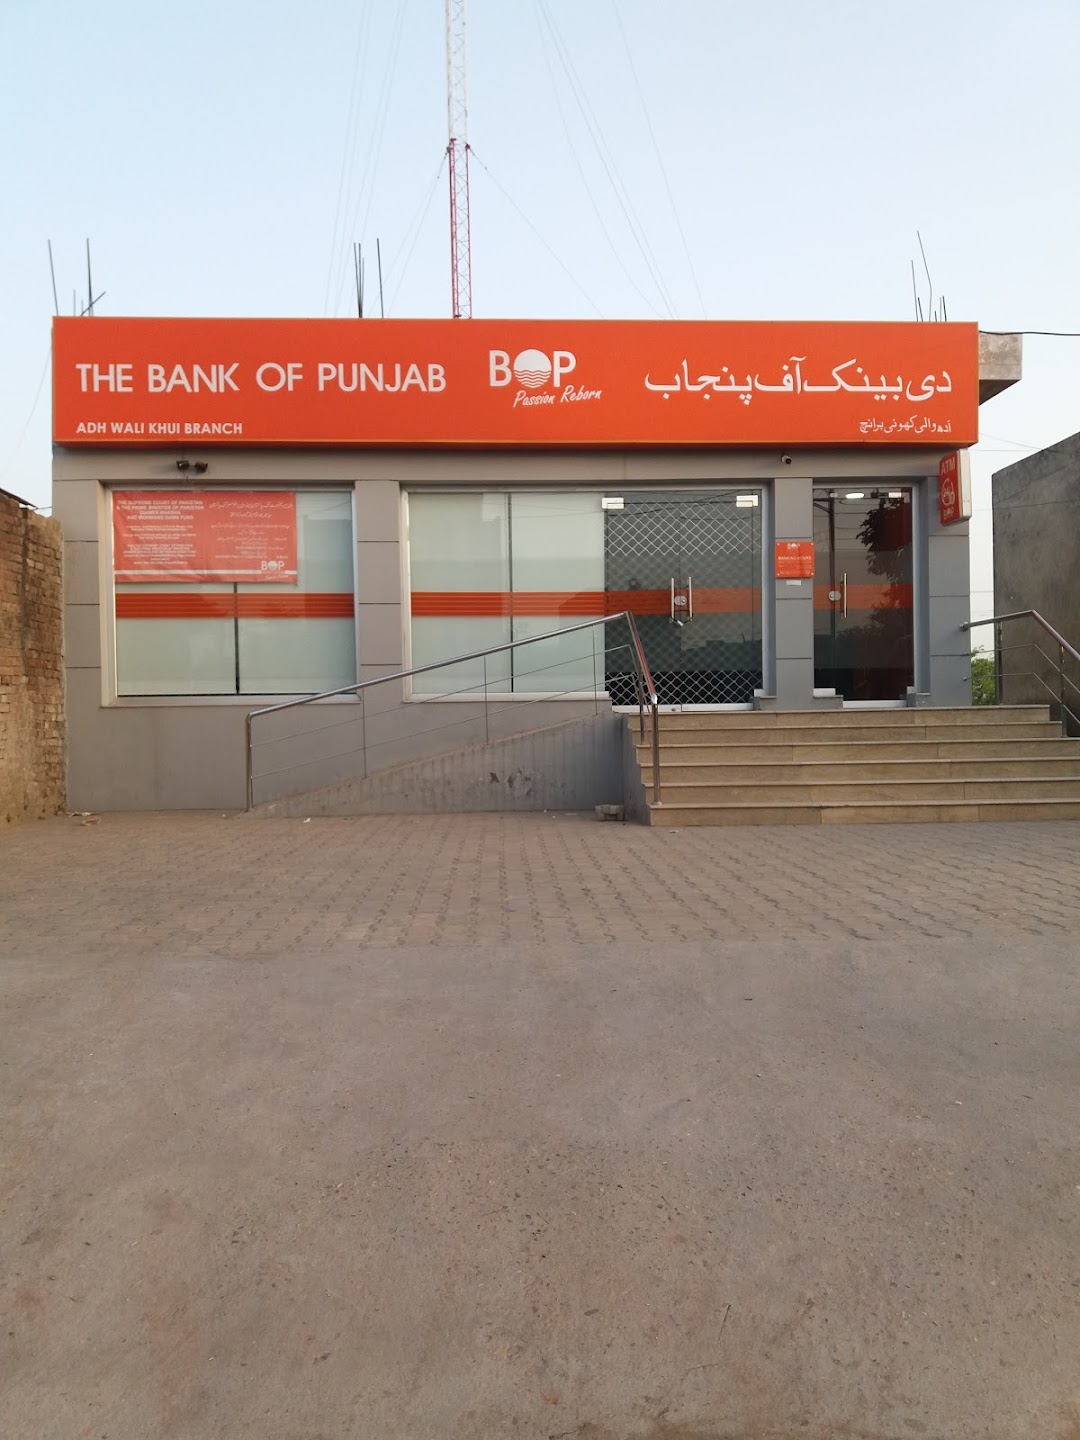 The Bank of punjab